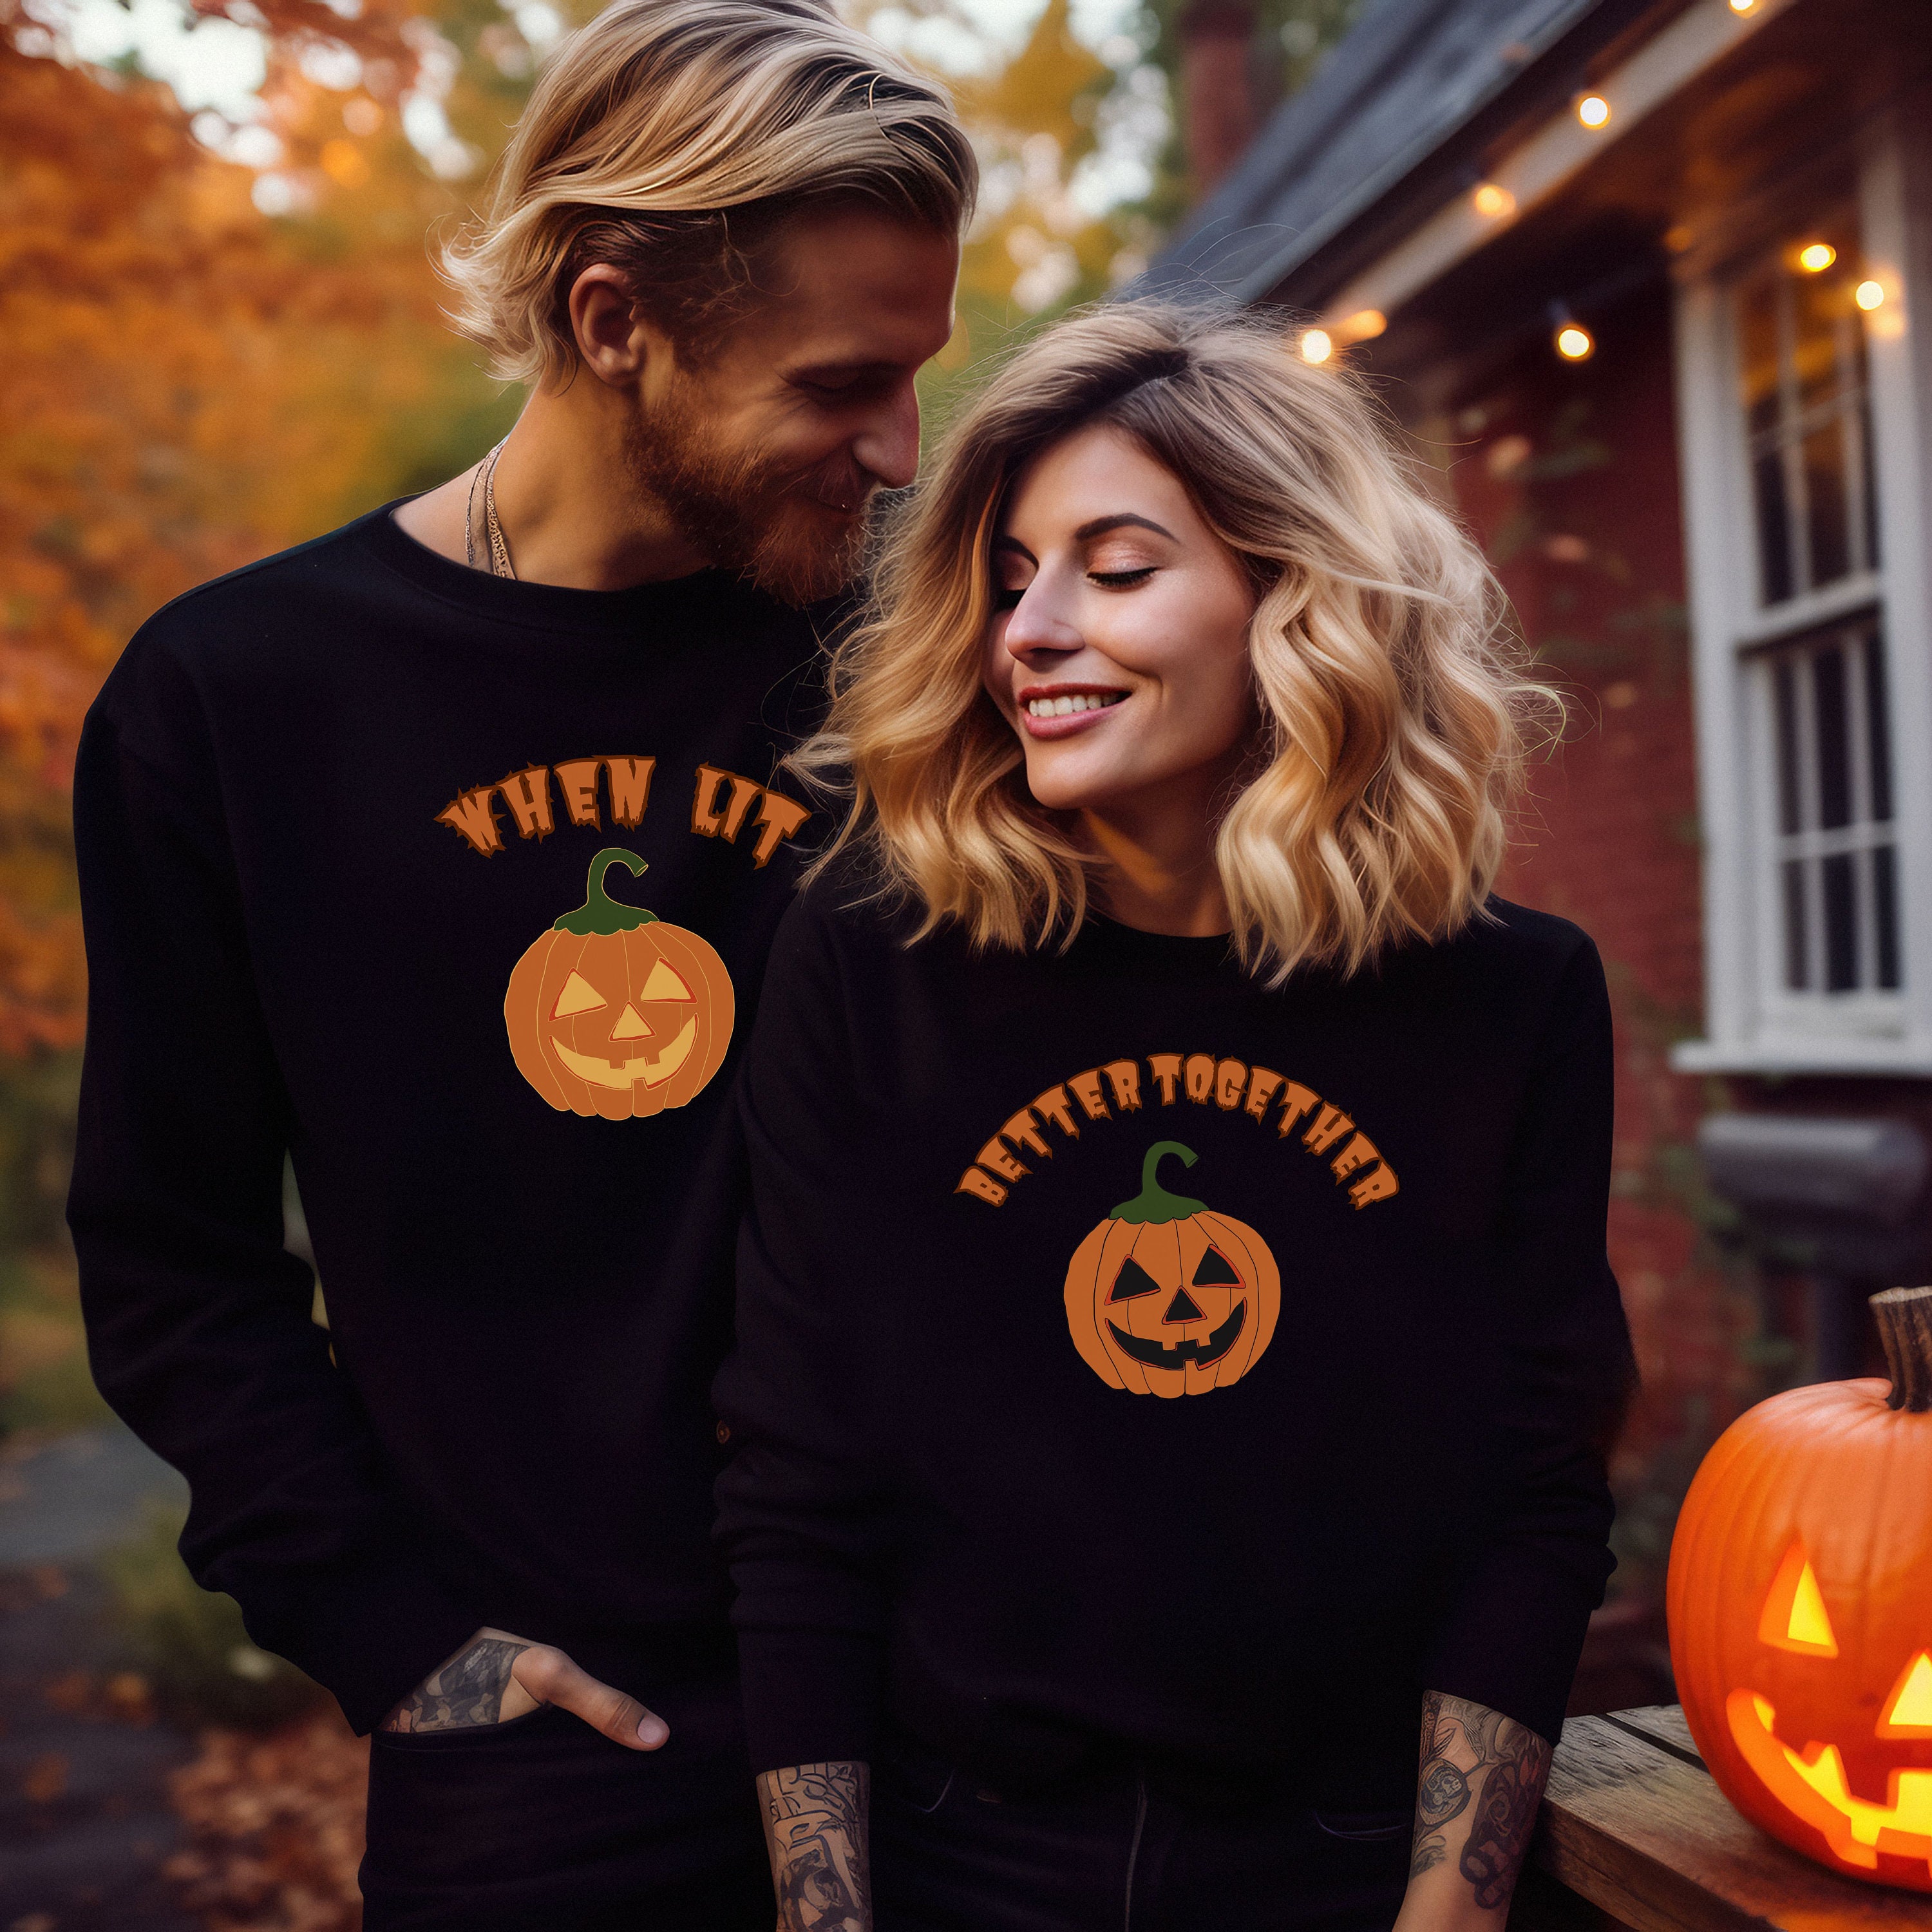 Discover Better Together when Lit T-shirt & Sweatshirt, Halloween Couples Shirt, Couple Matching Shirts, Couple Halloween Shirts, Couples Shirt